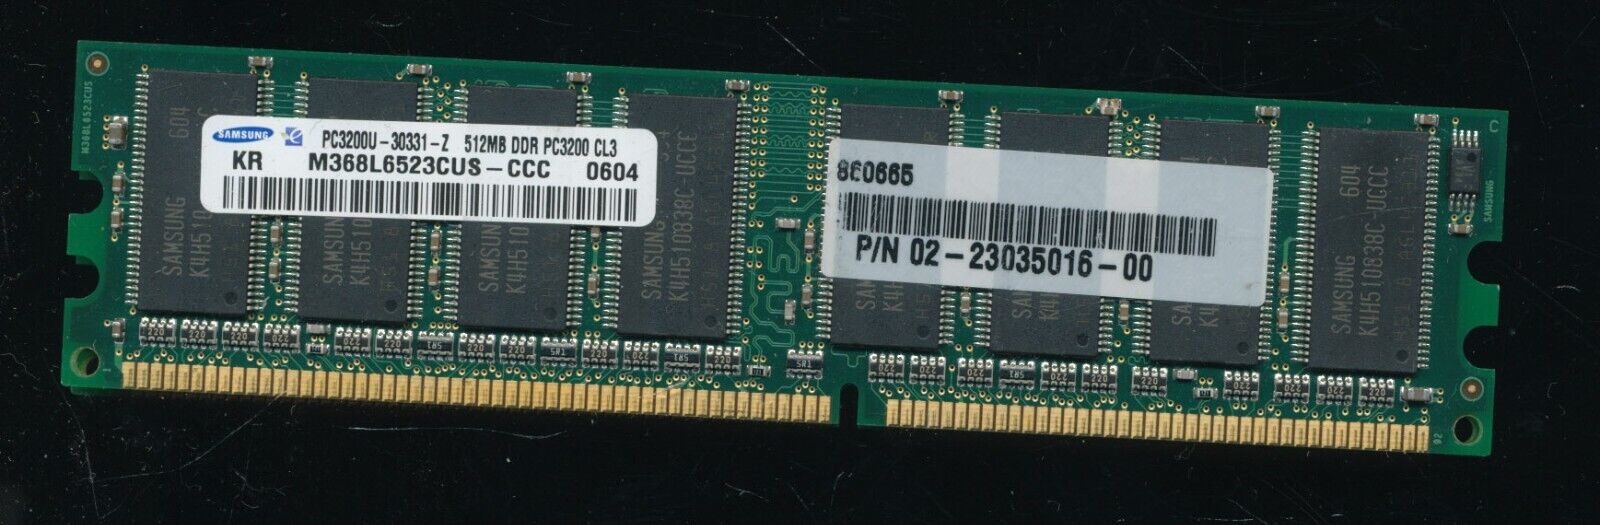 Samsung 1GB Kit (512MBx2) DDR400 PC3200 RAM non-ECC Samsung Chips